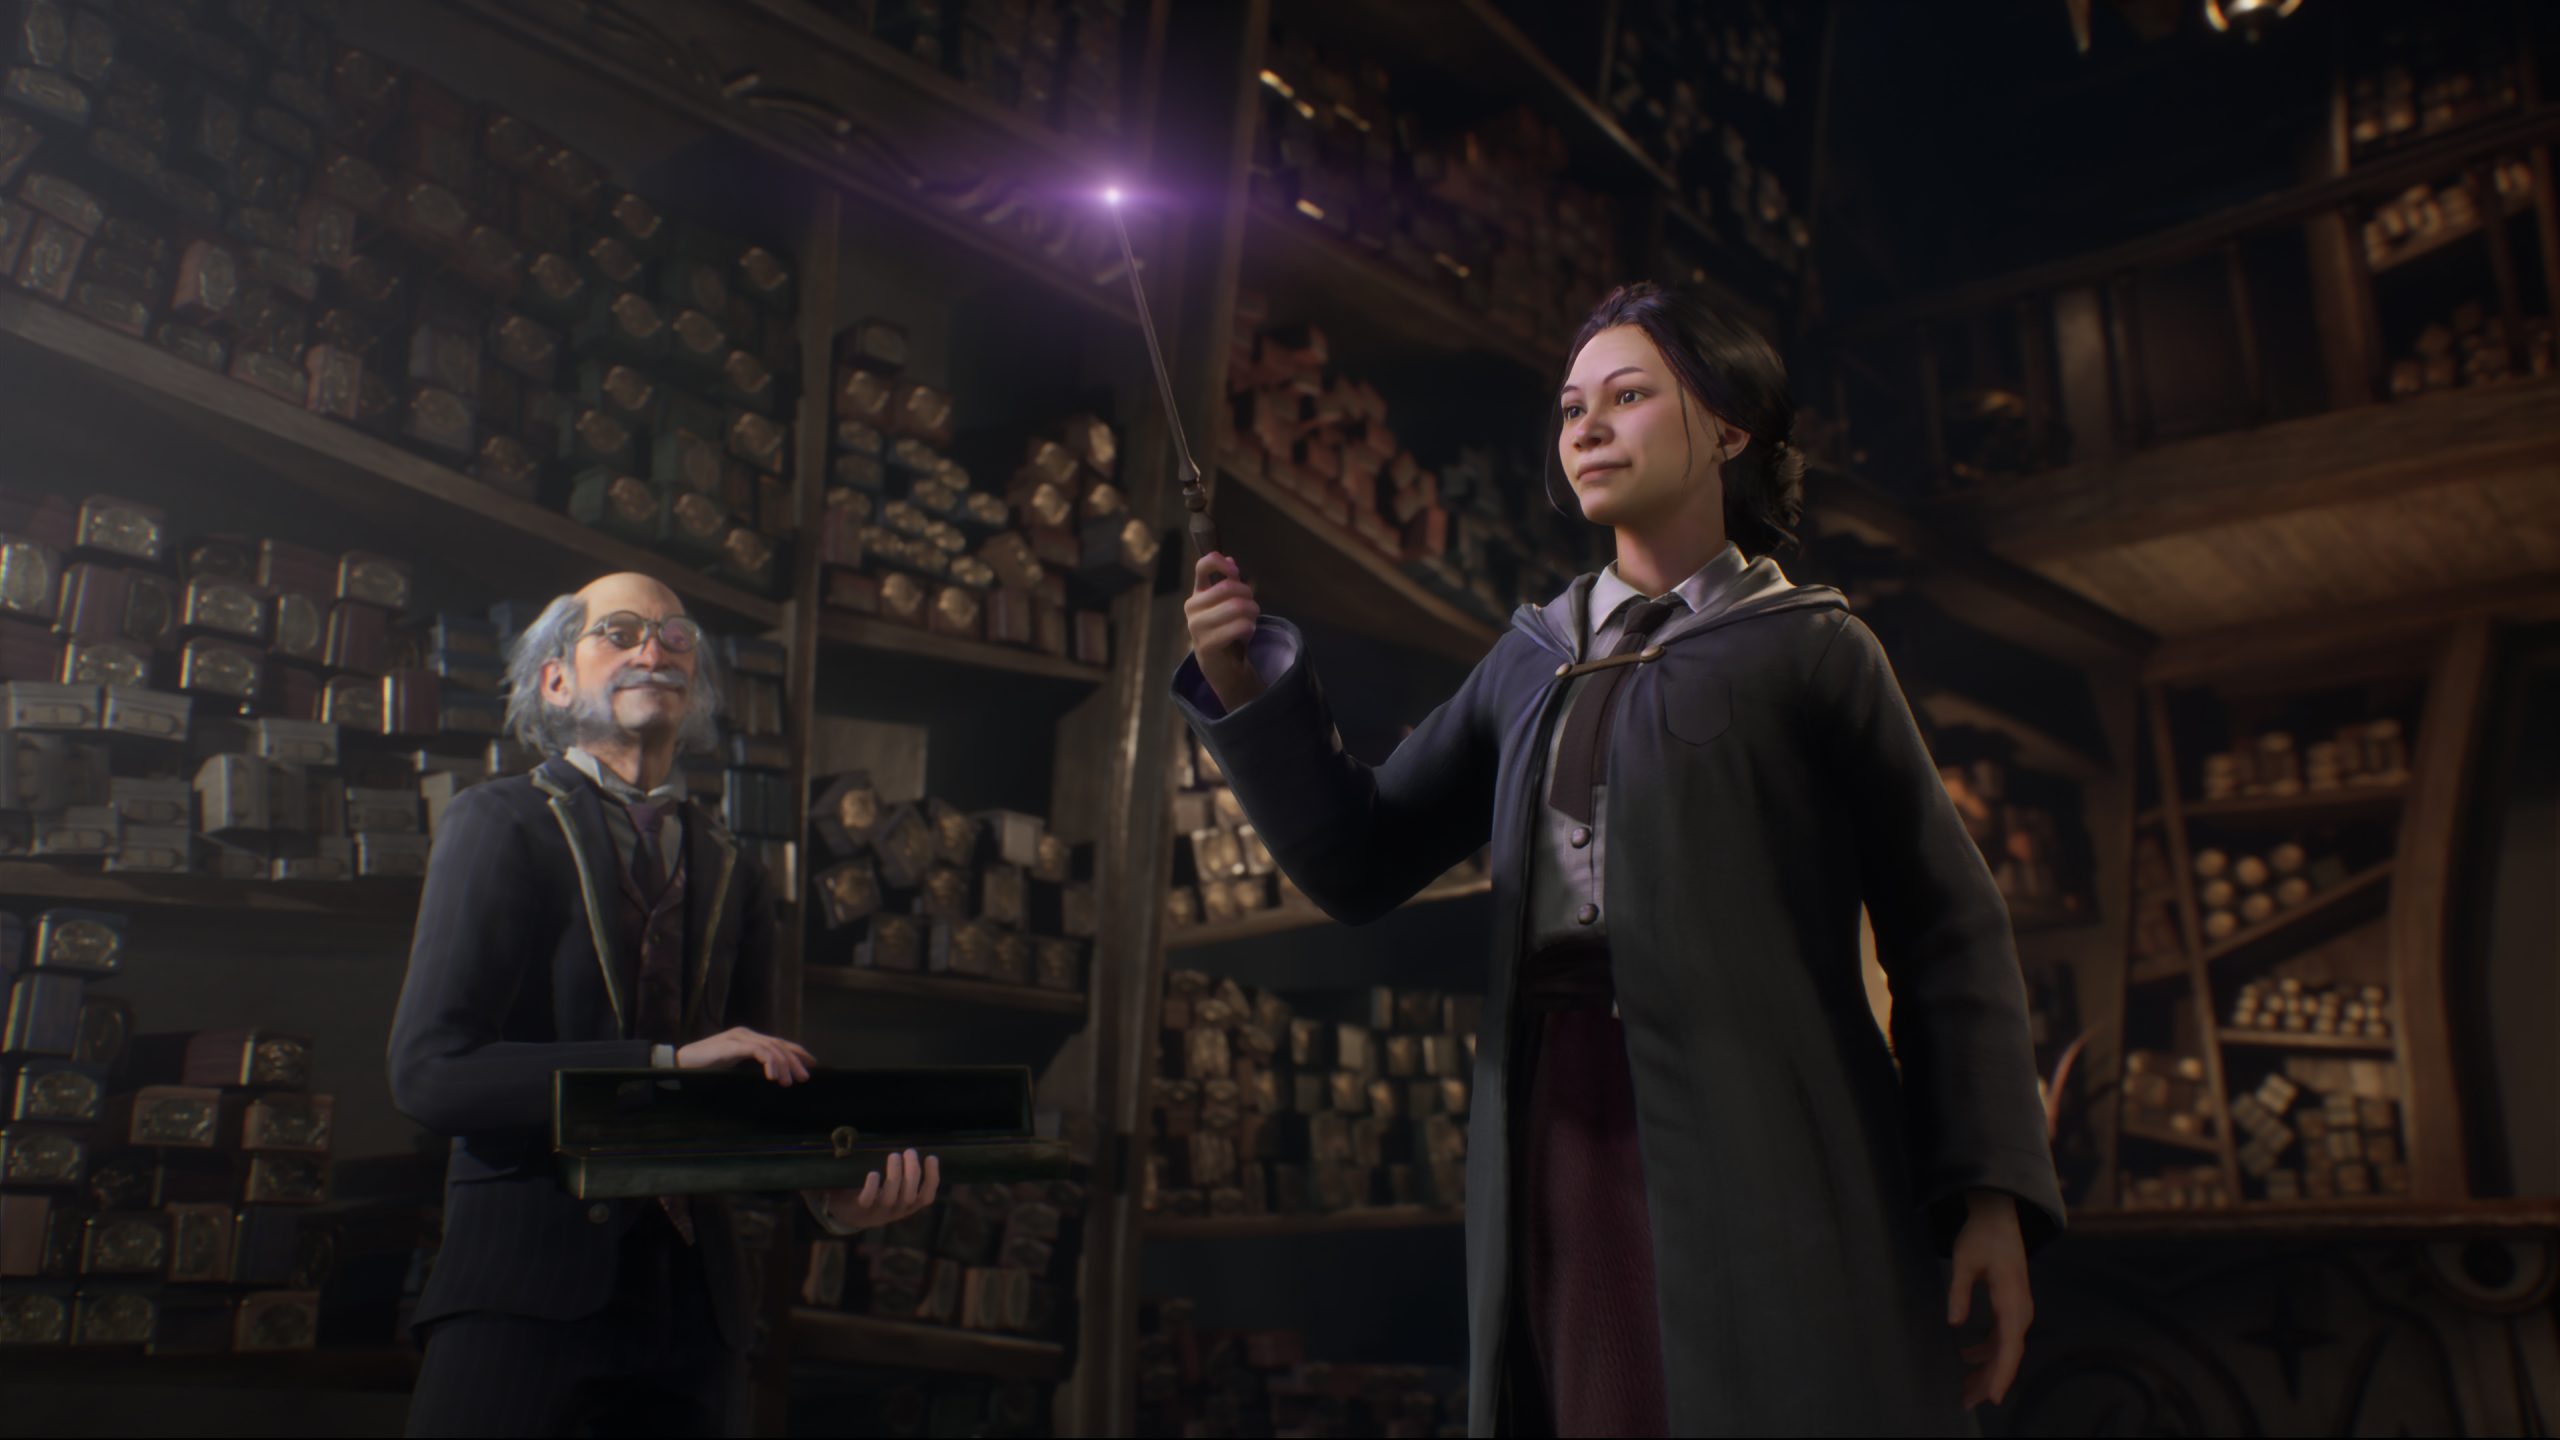 Hogwarts Legacy on Steam Deck  Gameplay & Frame Rate 